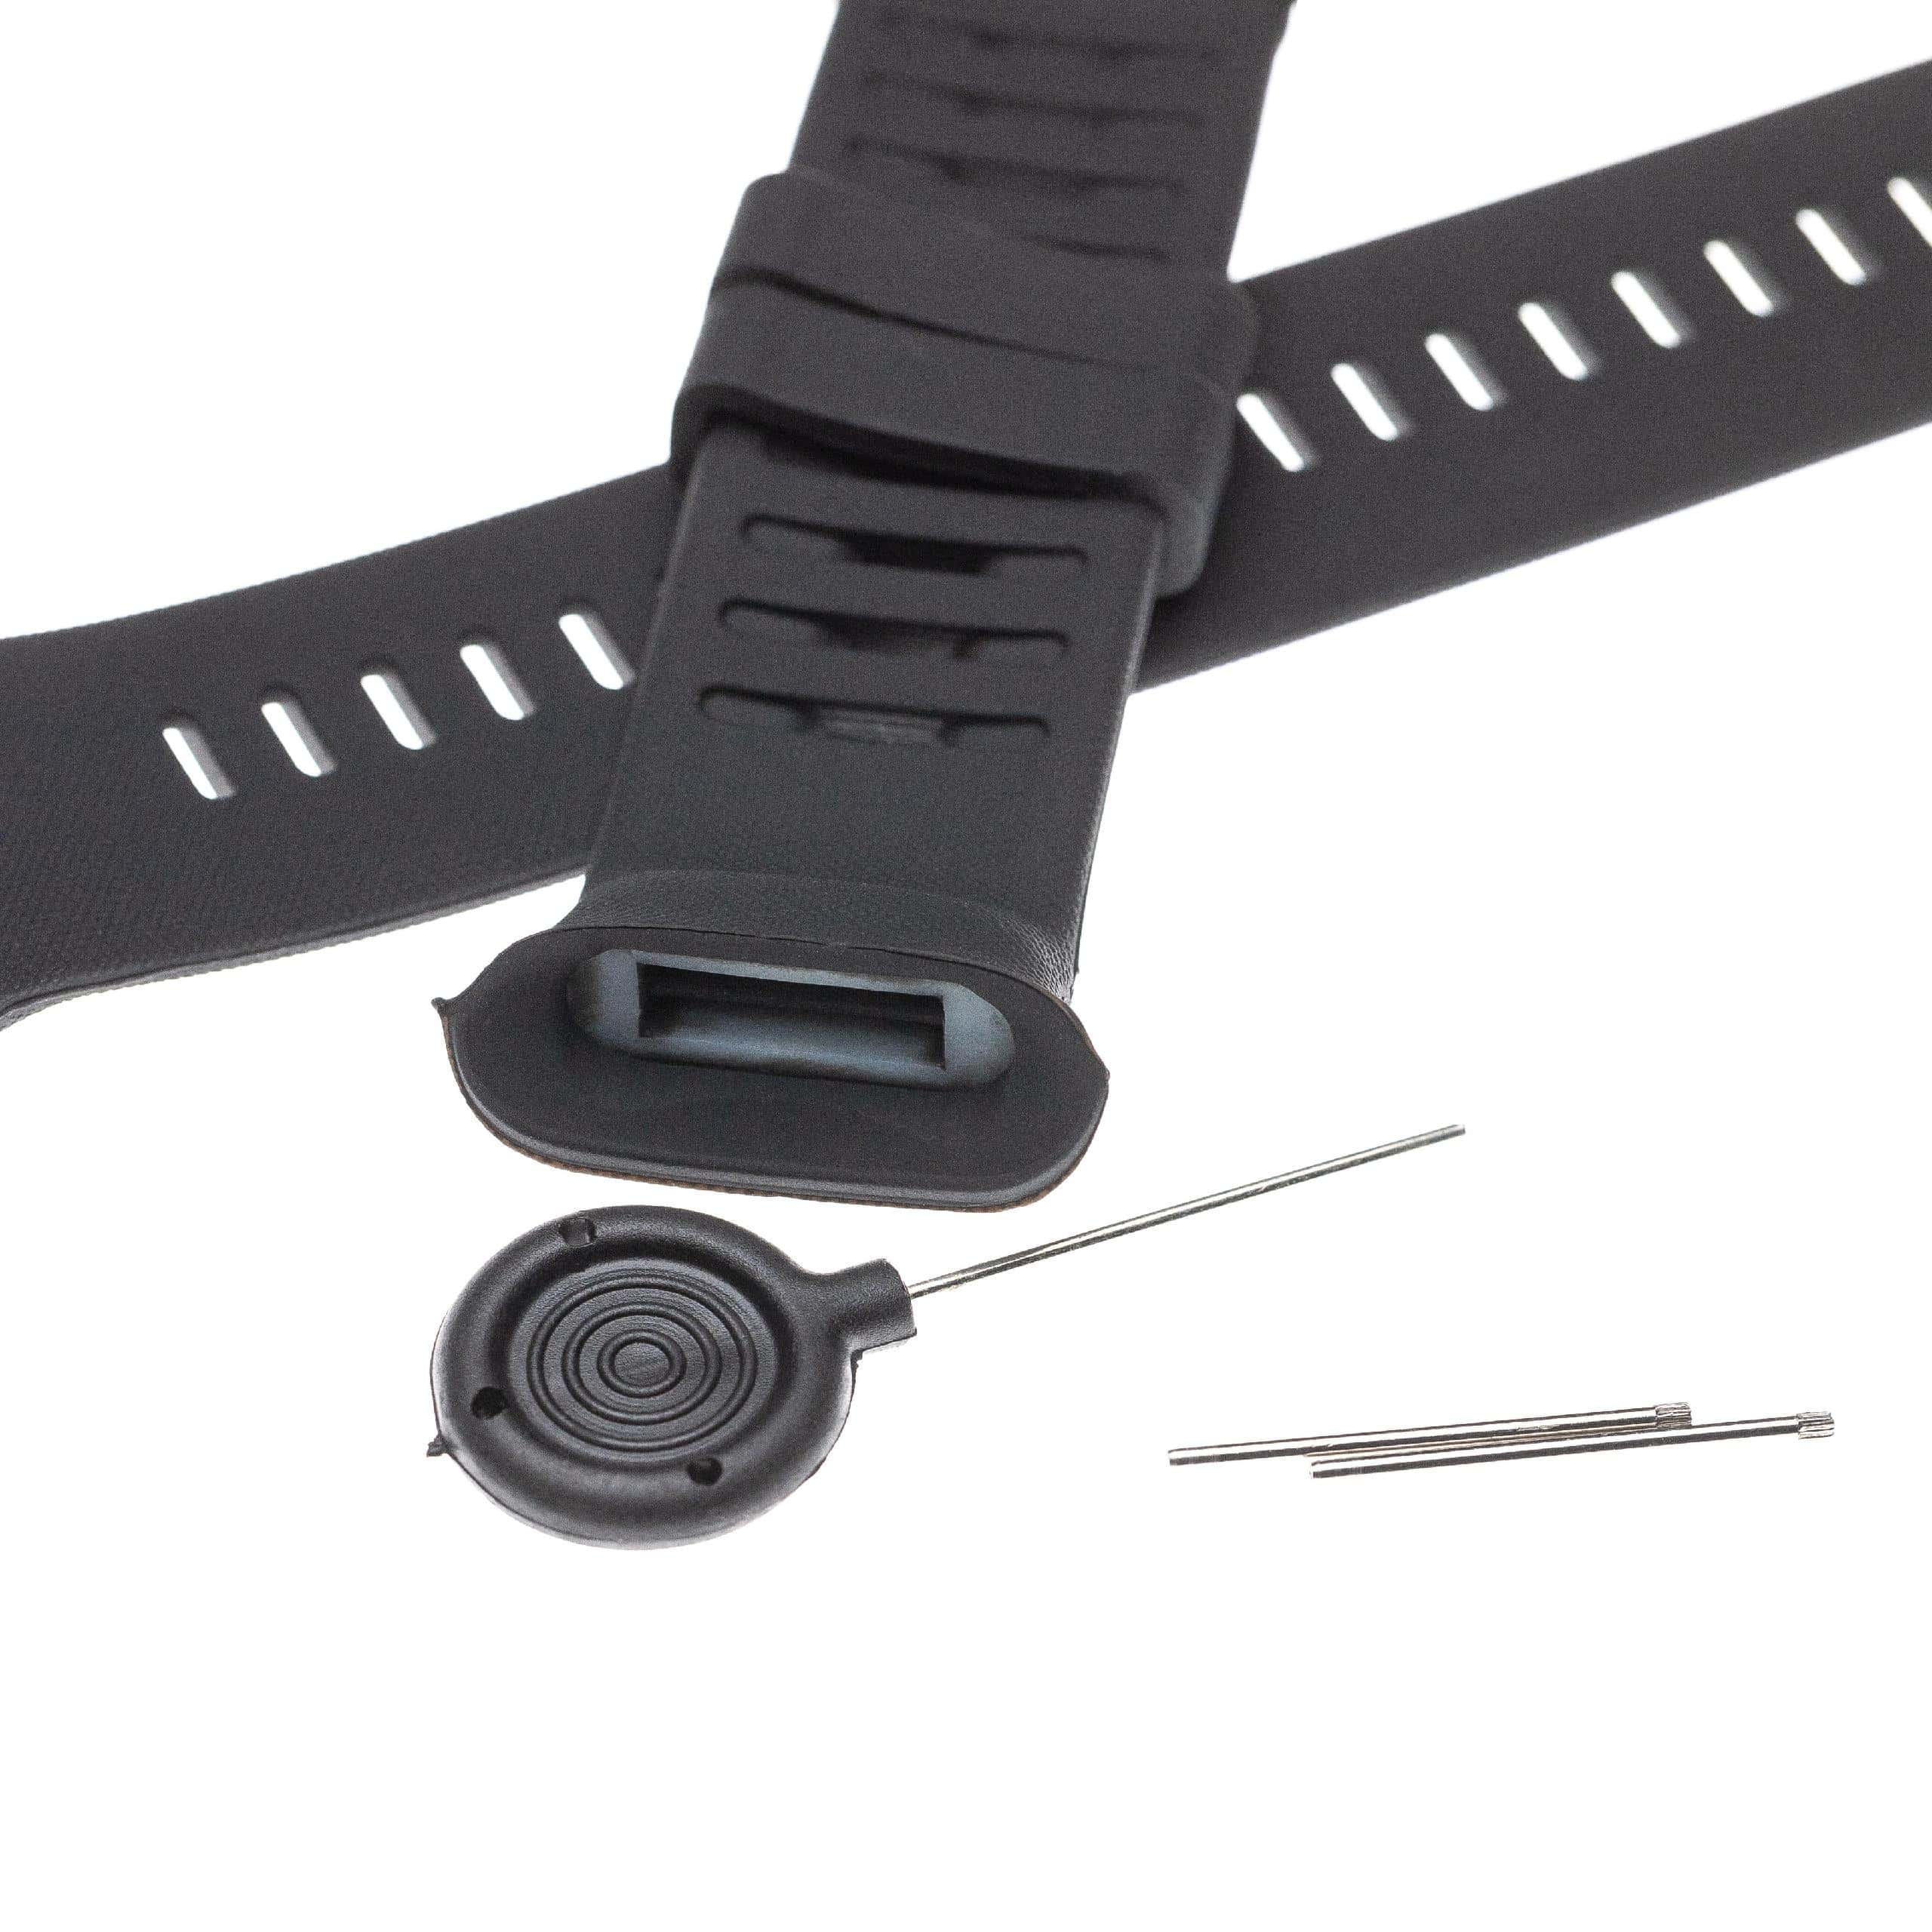 wristband for Polar Vantage Smartwatch - 12.6 + 8.7 cm long, black